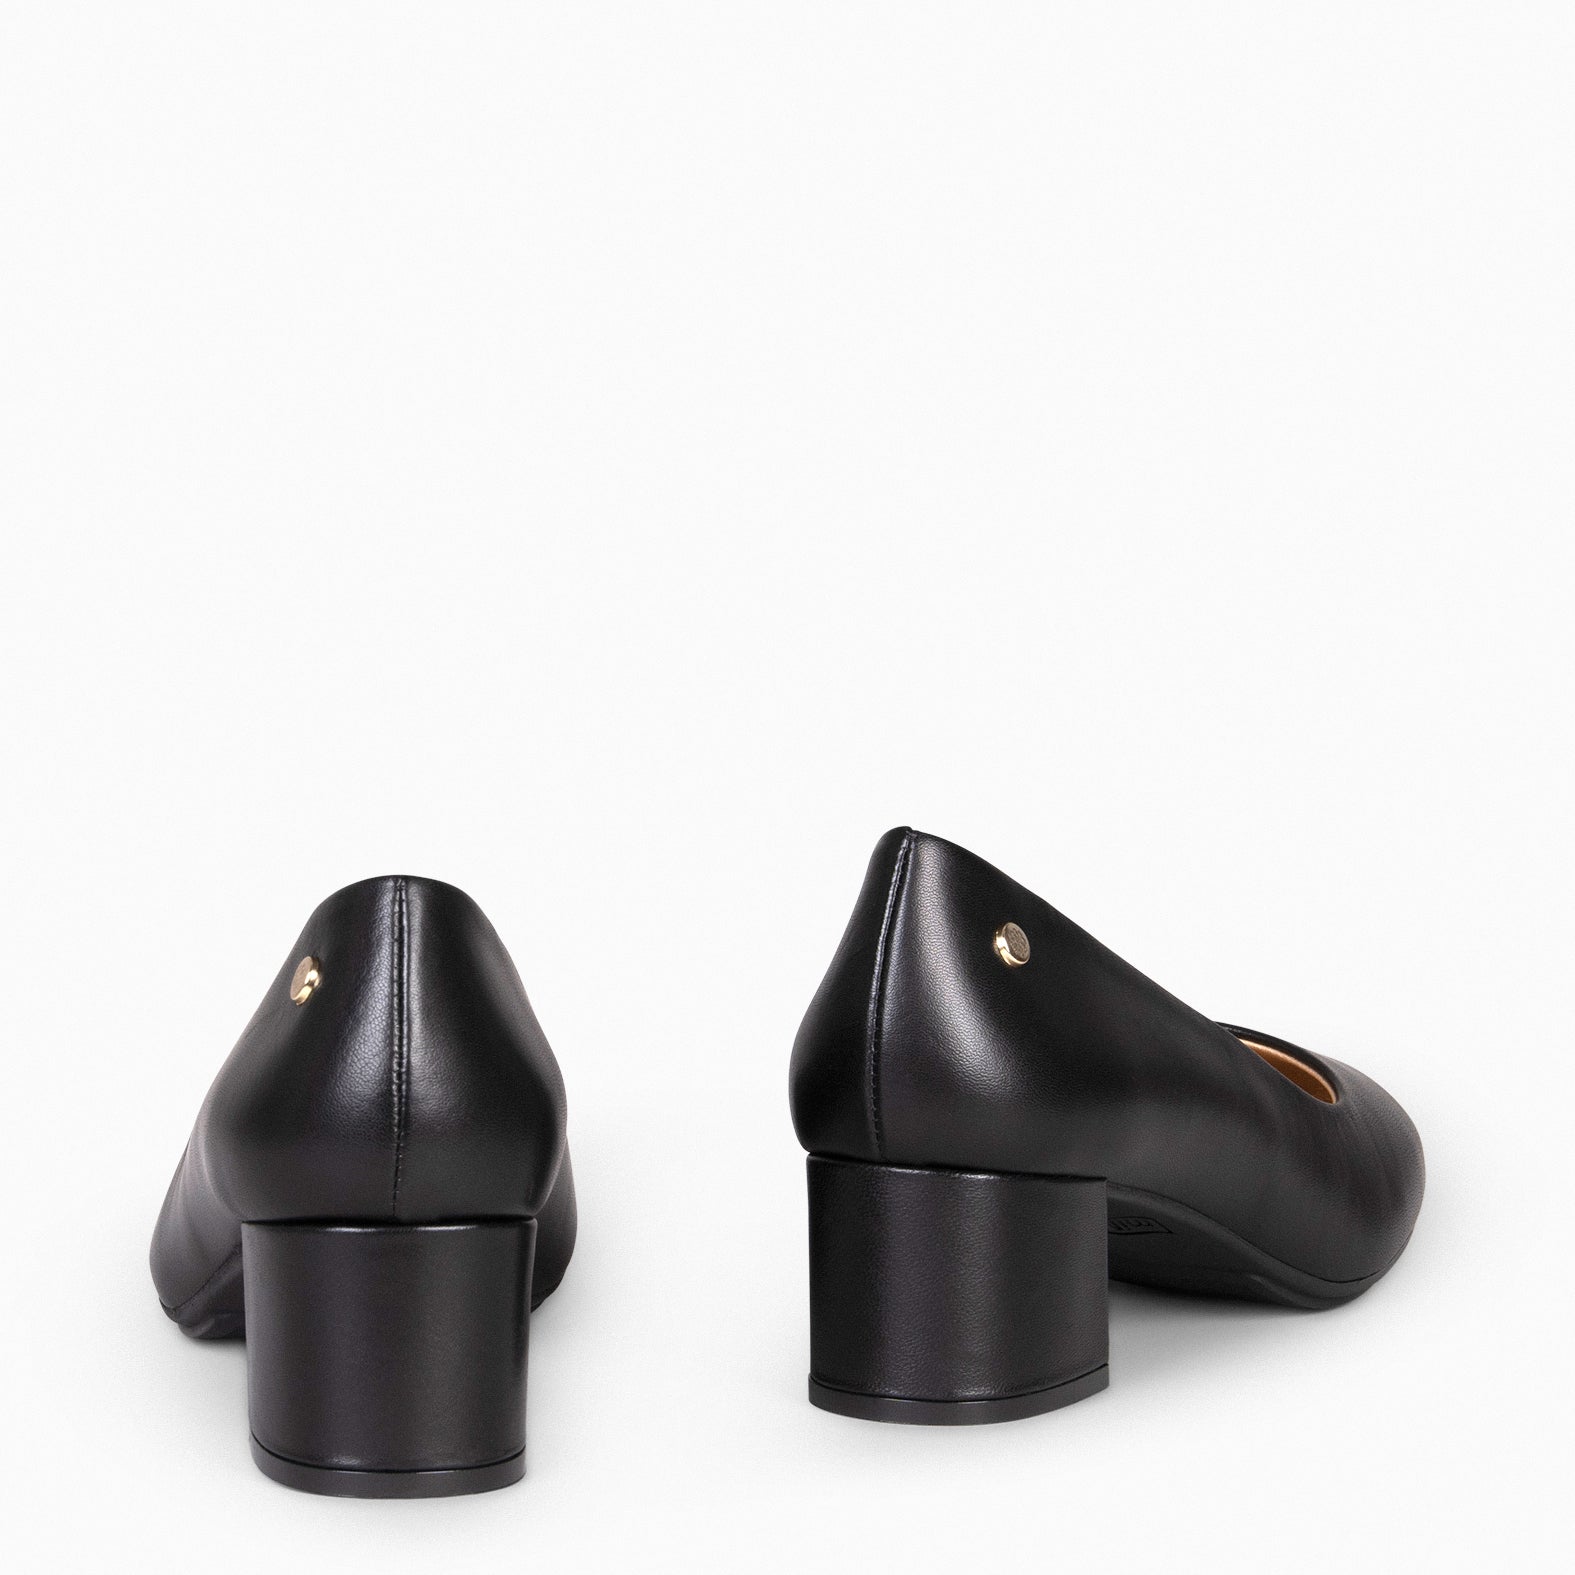 URBAN ROUND – BLACK nappa leather low heels